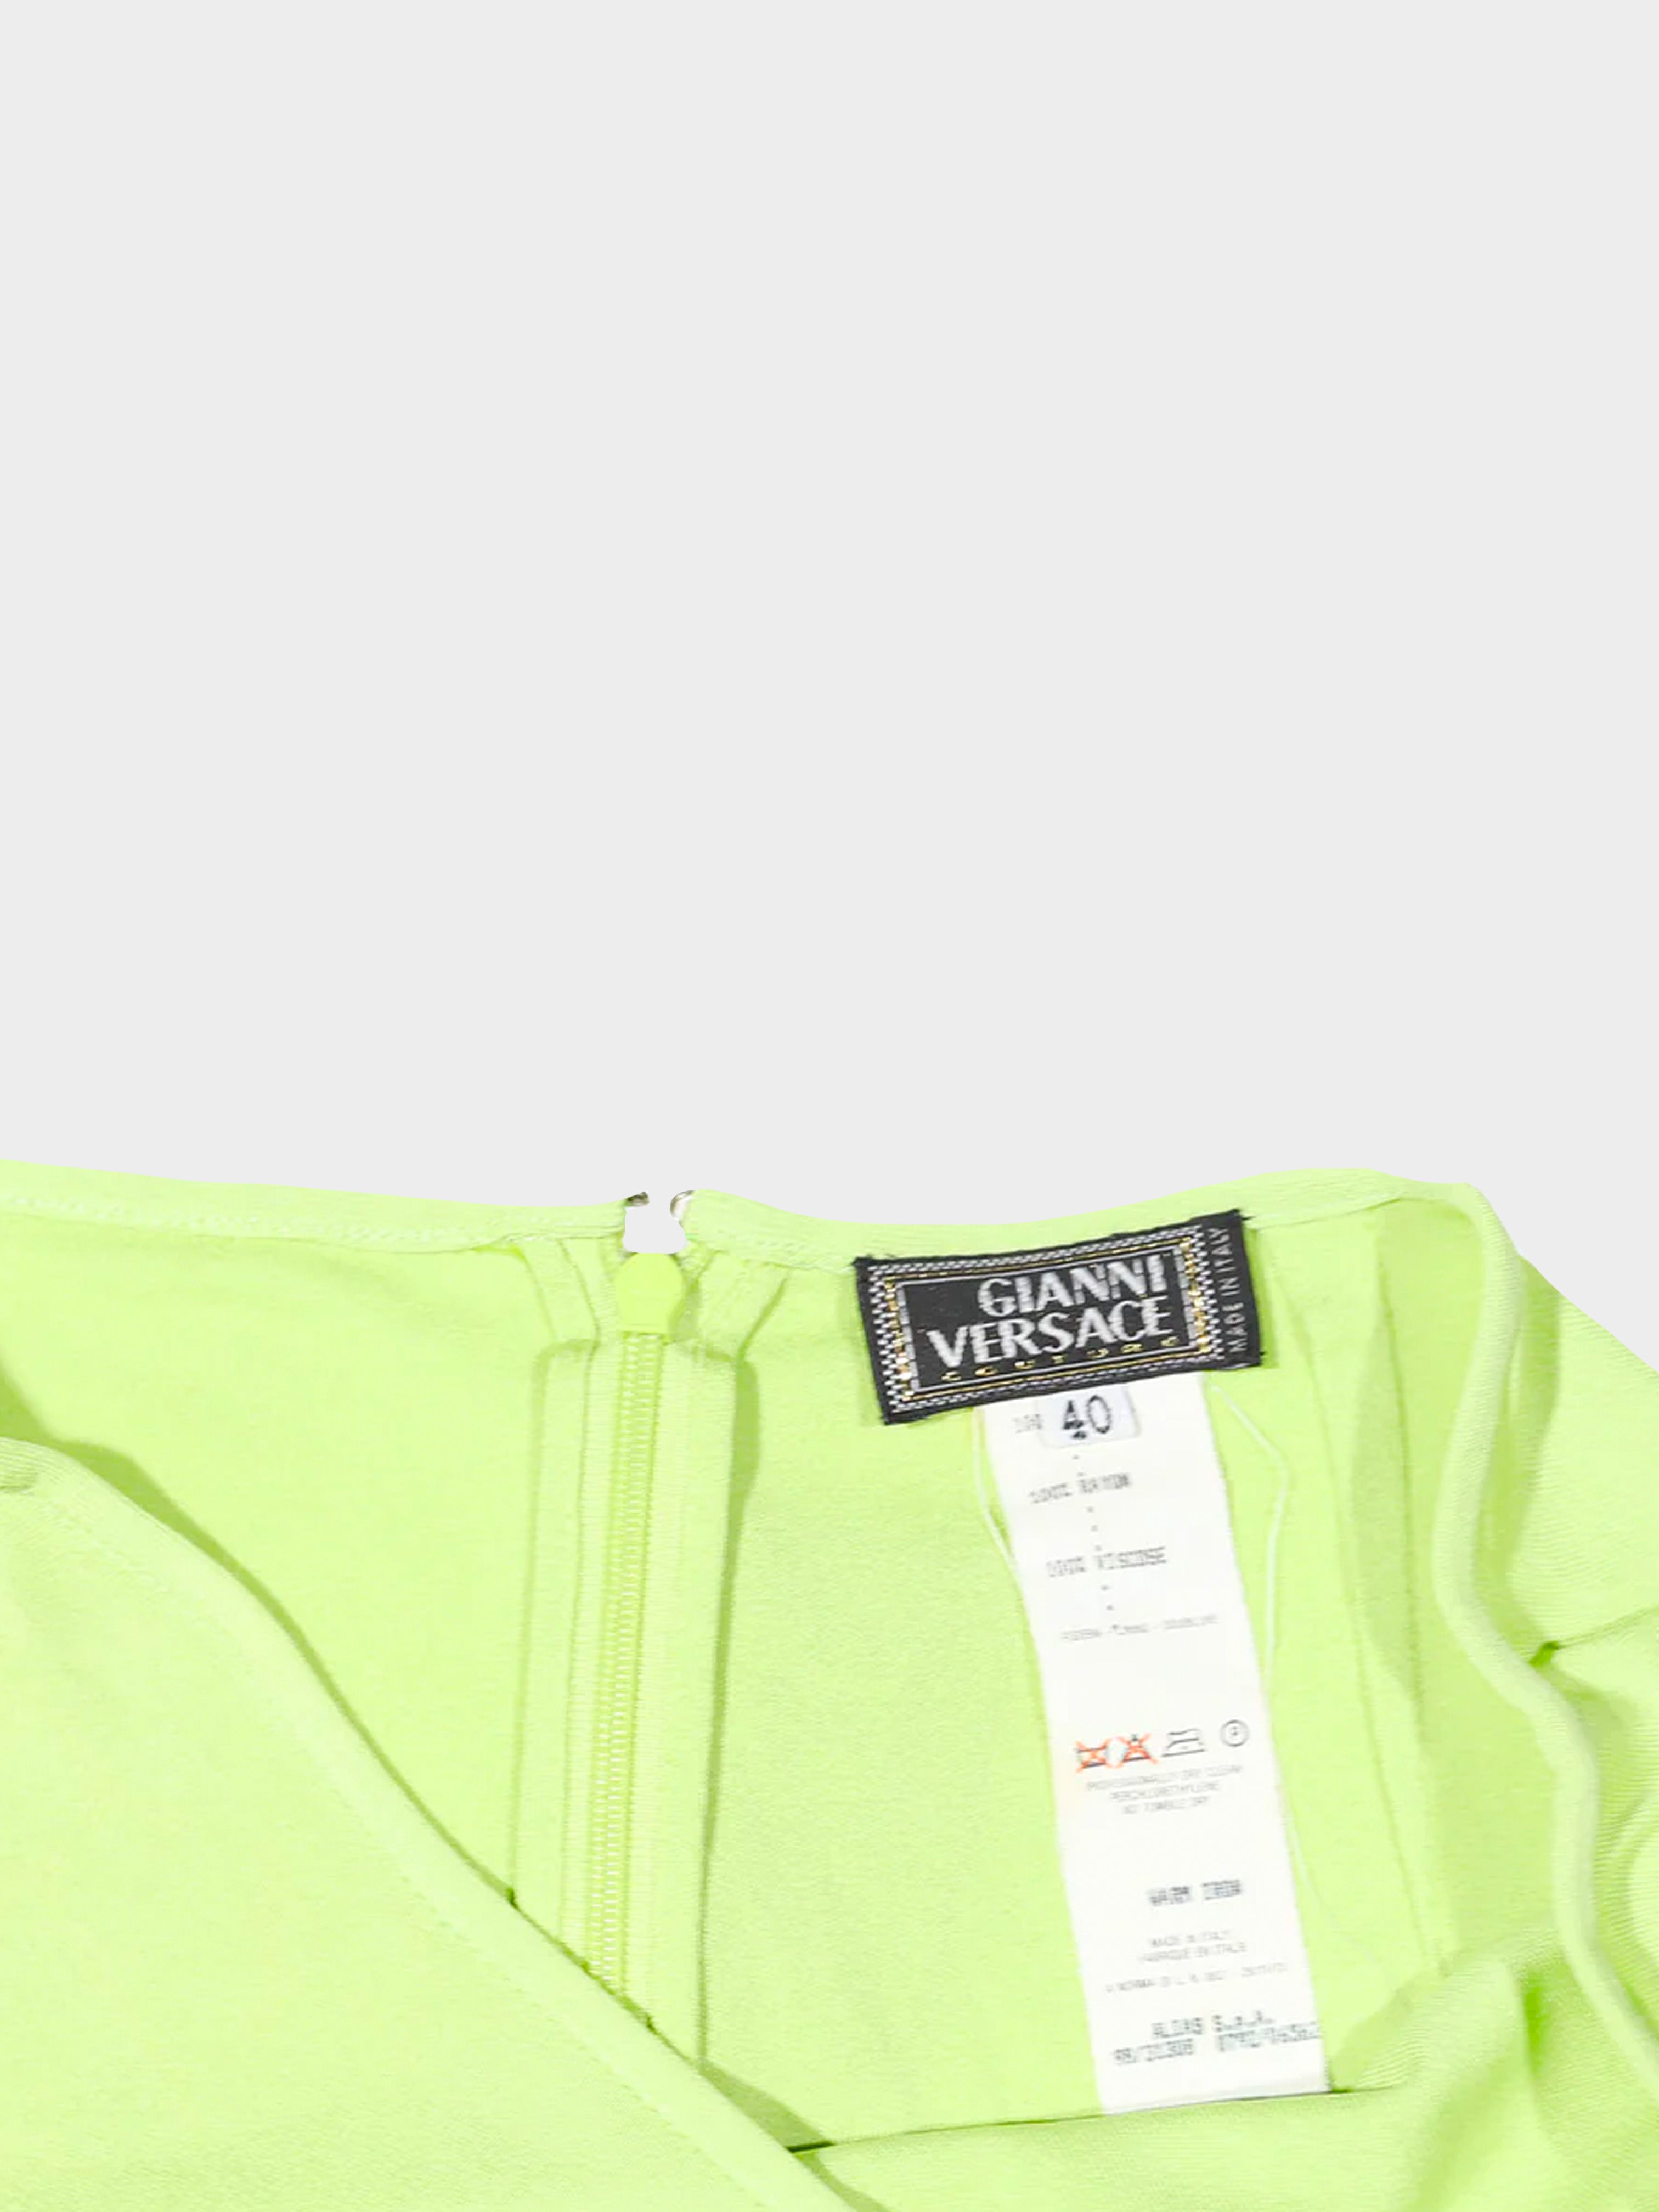 Gianni Versace SS 1998 Neon Green Skirt